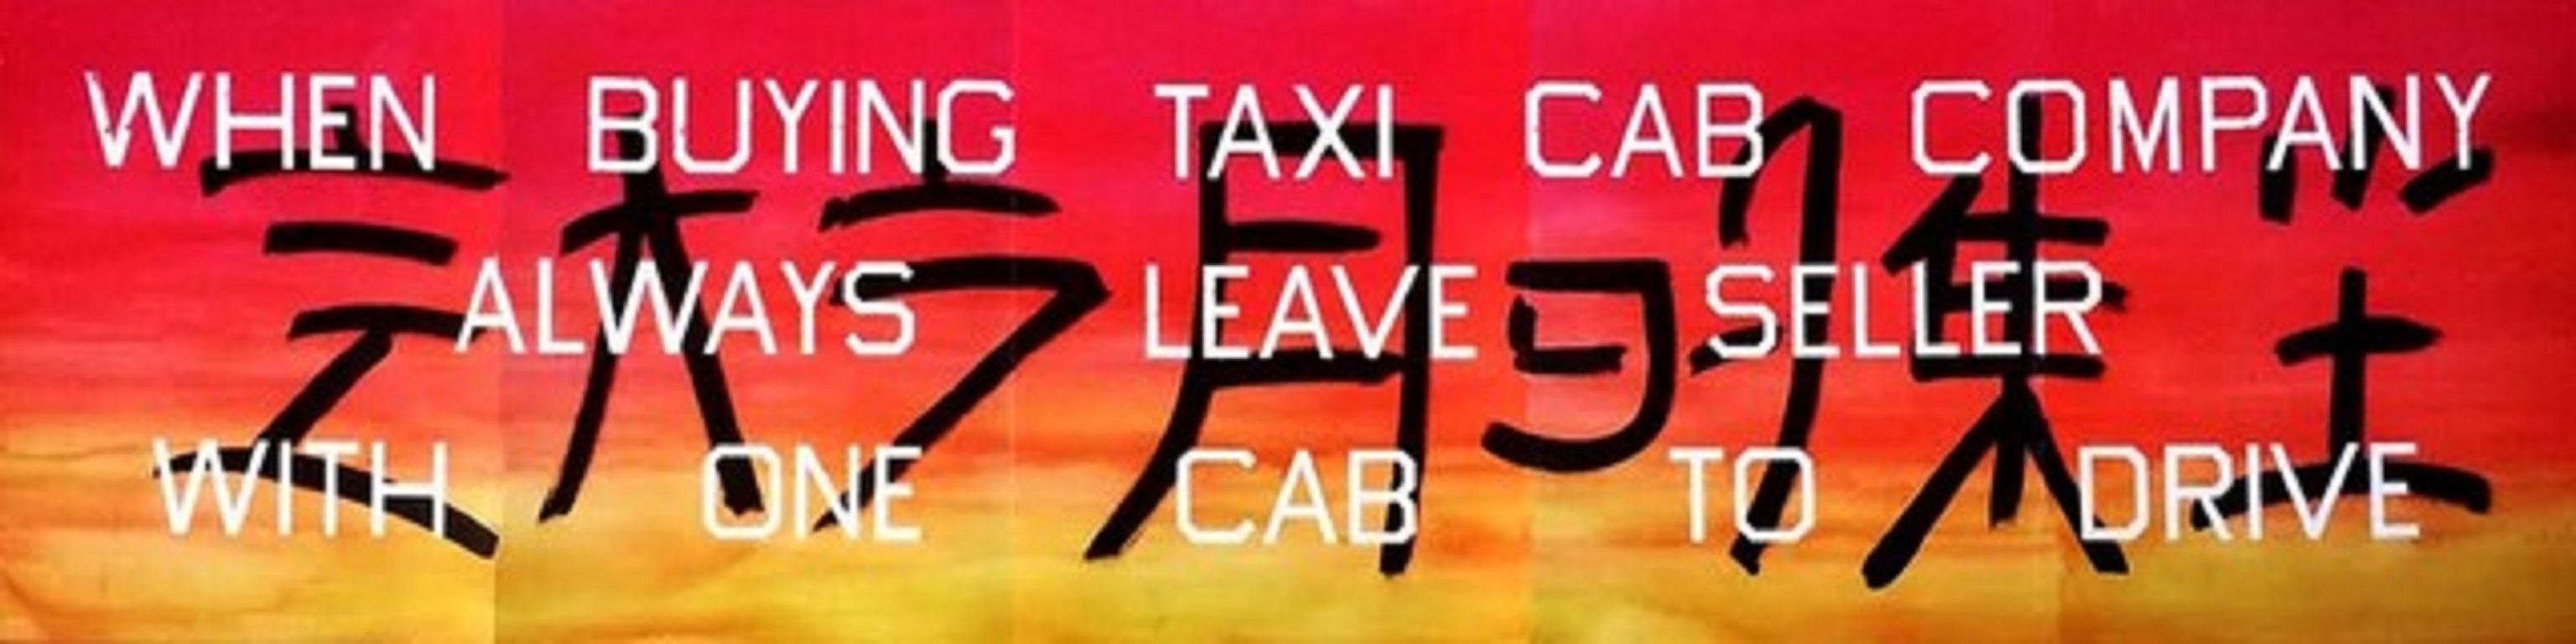 Taxi Cab - Print by Ed Ruscha